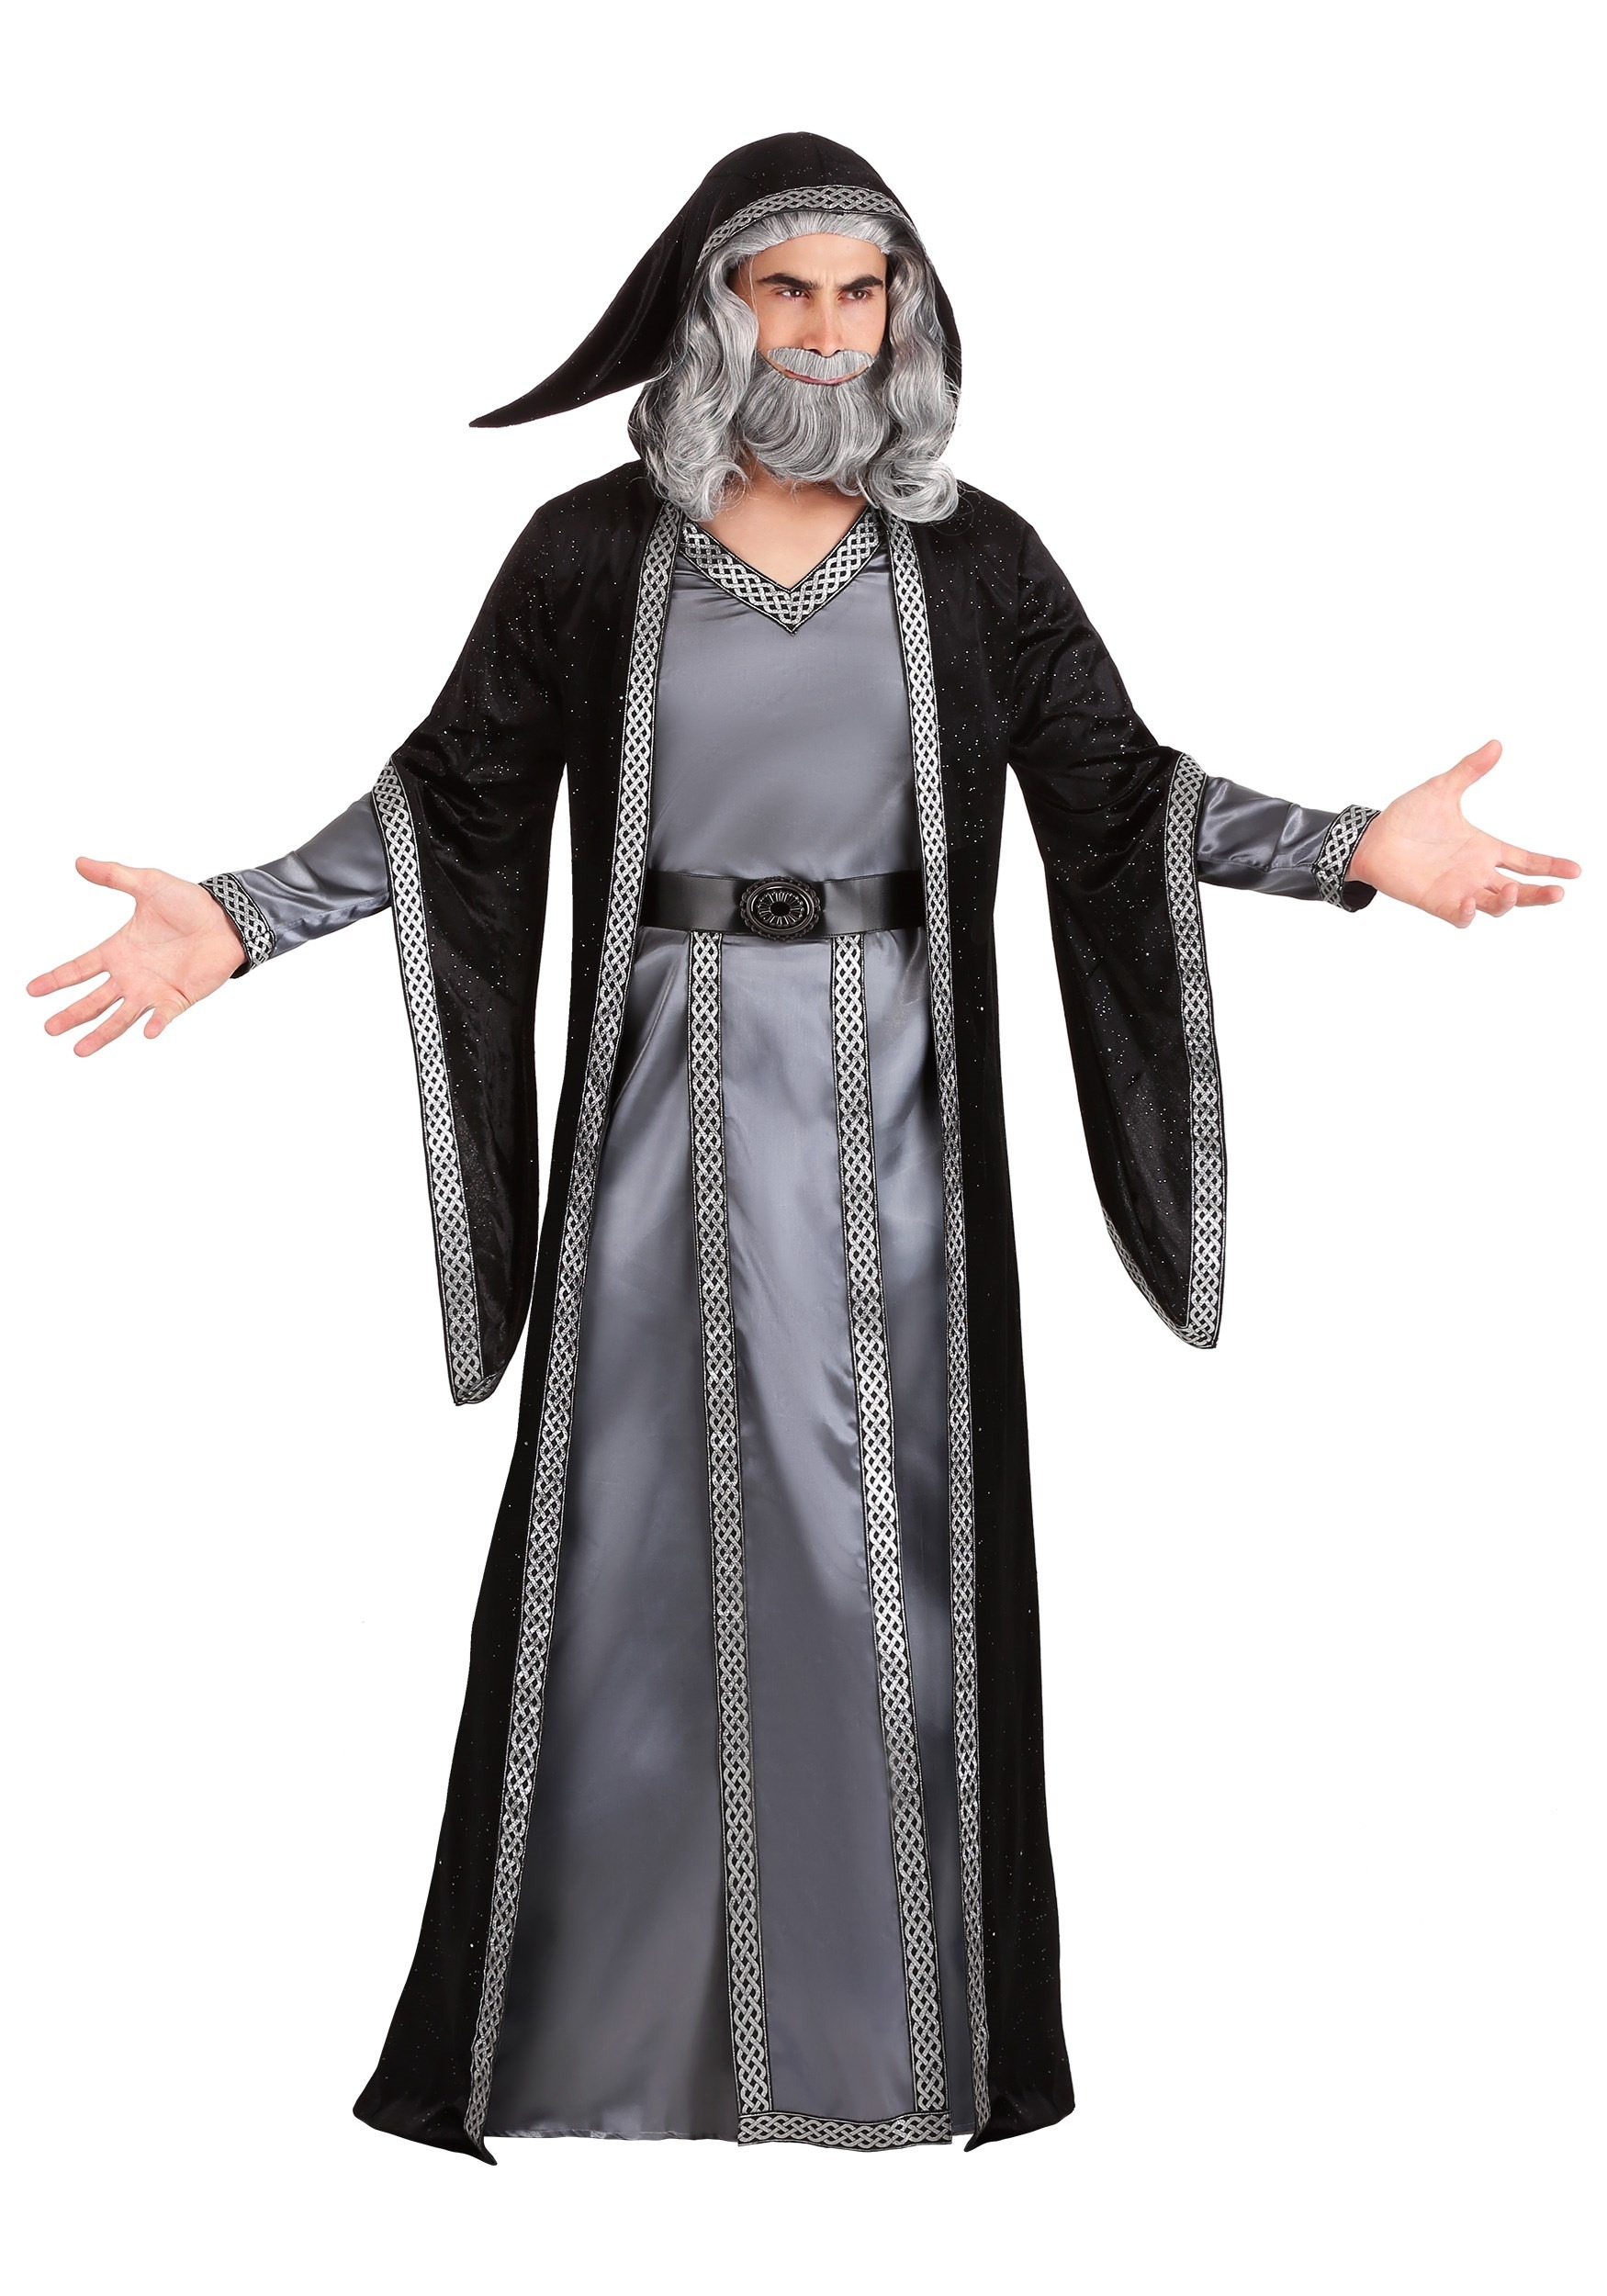 Photos - Fancy Dress Wizard FUN Costumes Deluxe Dark  Costume Black/Gray FUN0987AD 